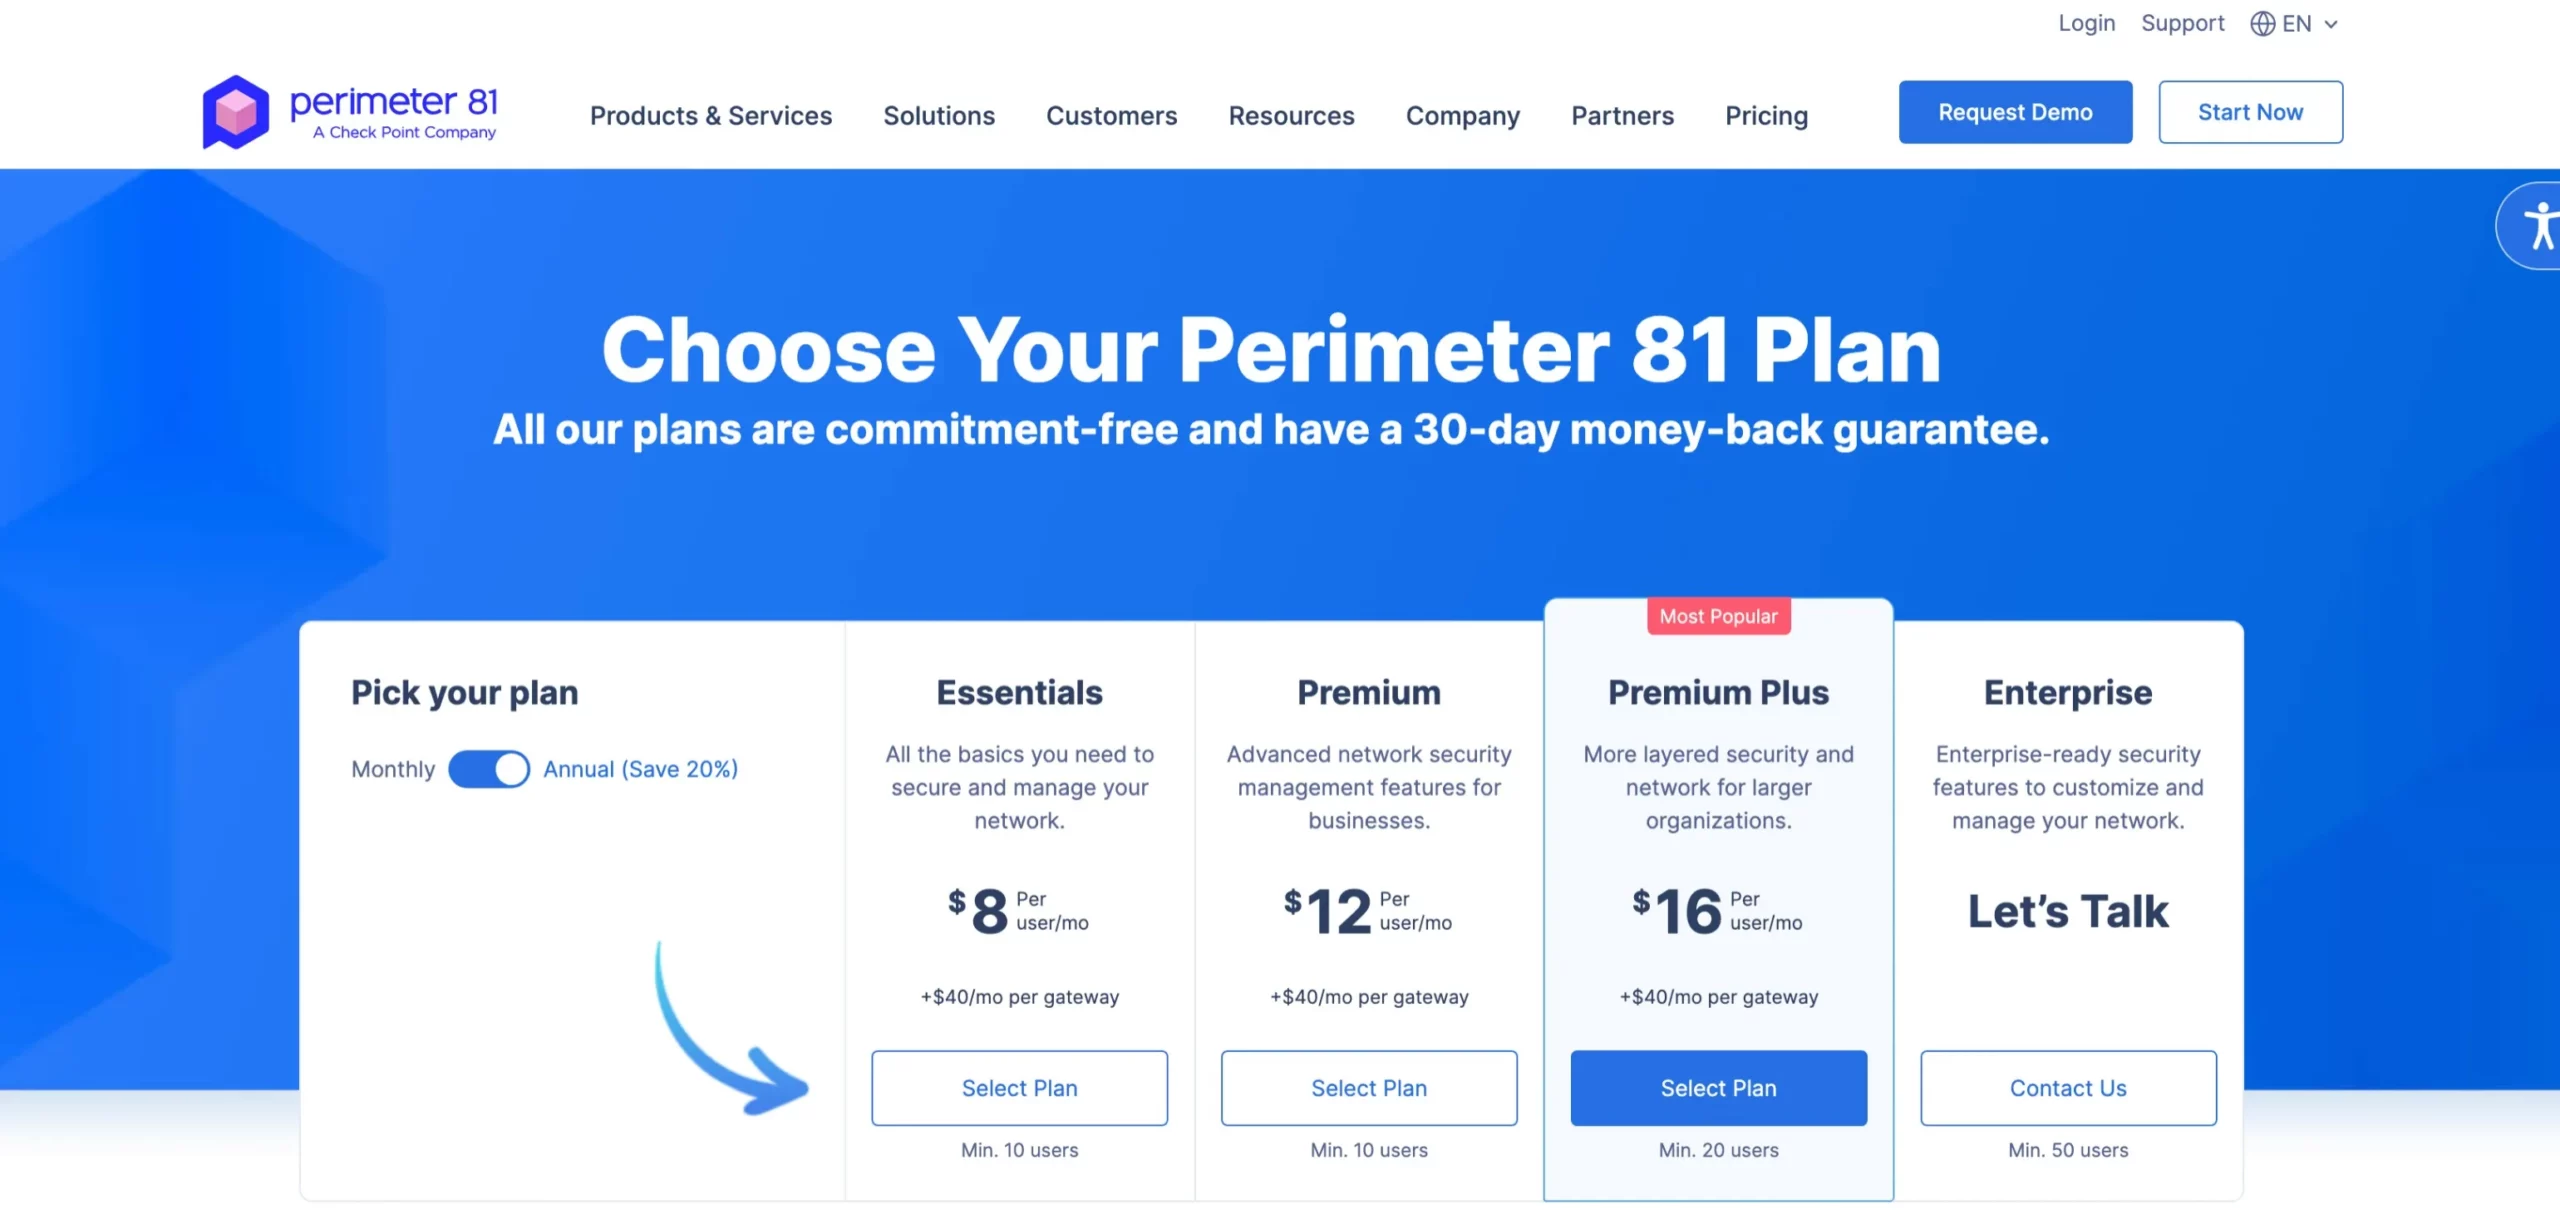 Perimeter 81 Price Plan: